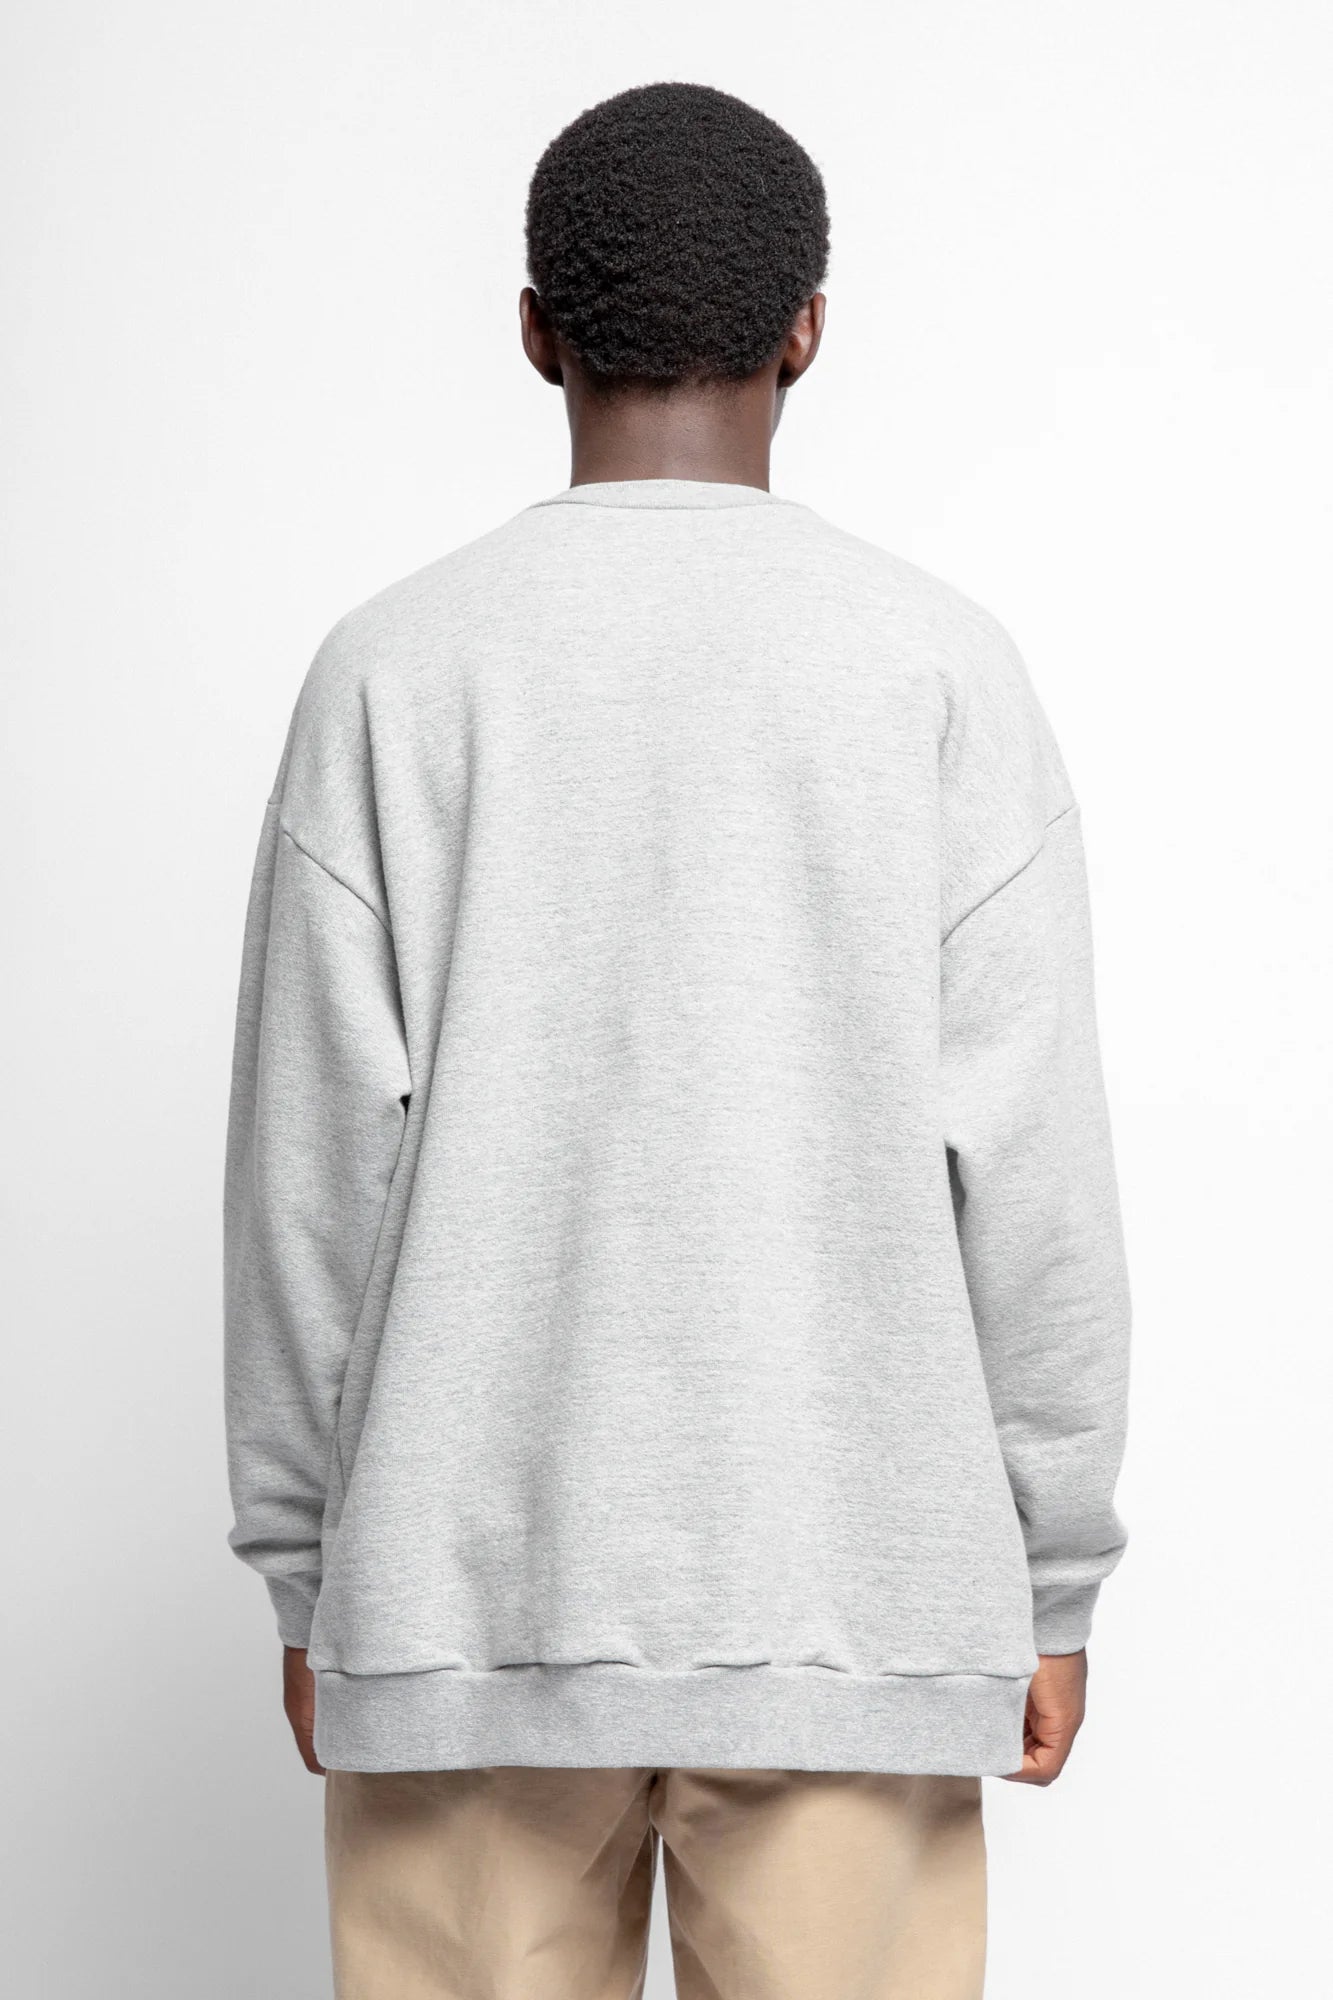 Unisex classic sweatshirt in heather grey